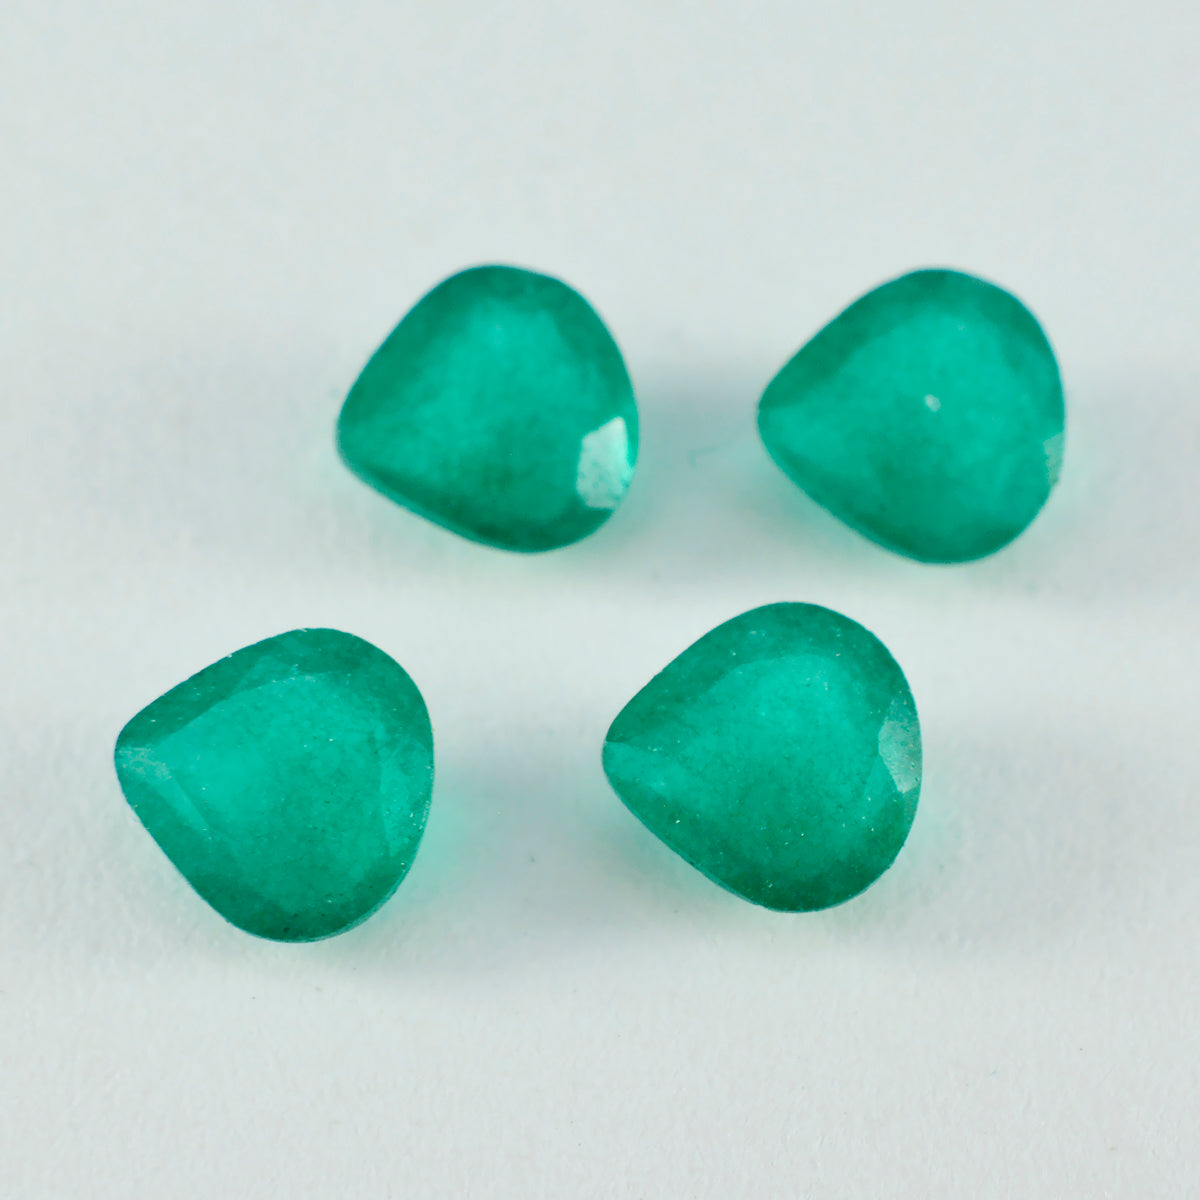 Riyogems 1PC Genuine Green Jasper Faceted 14x14 mm Heart Shape Good Quality Gemstone